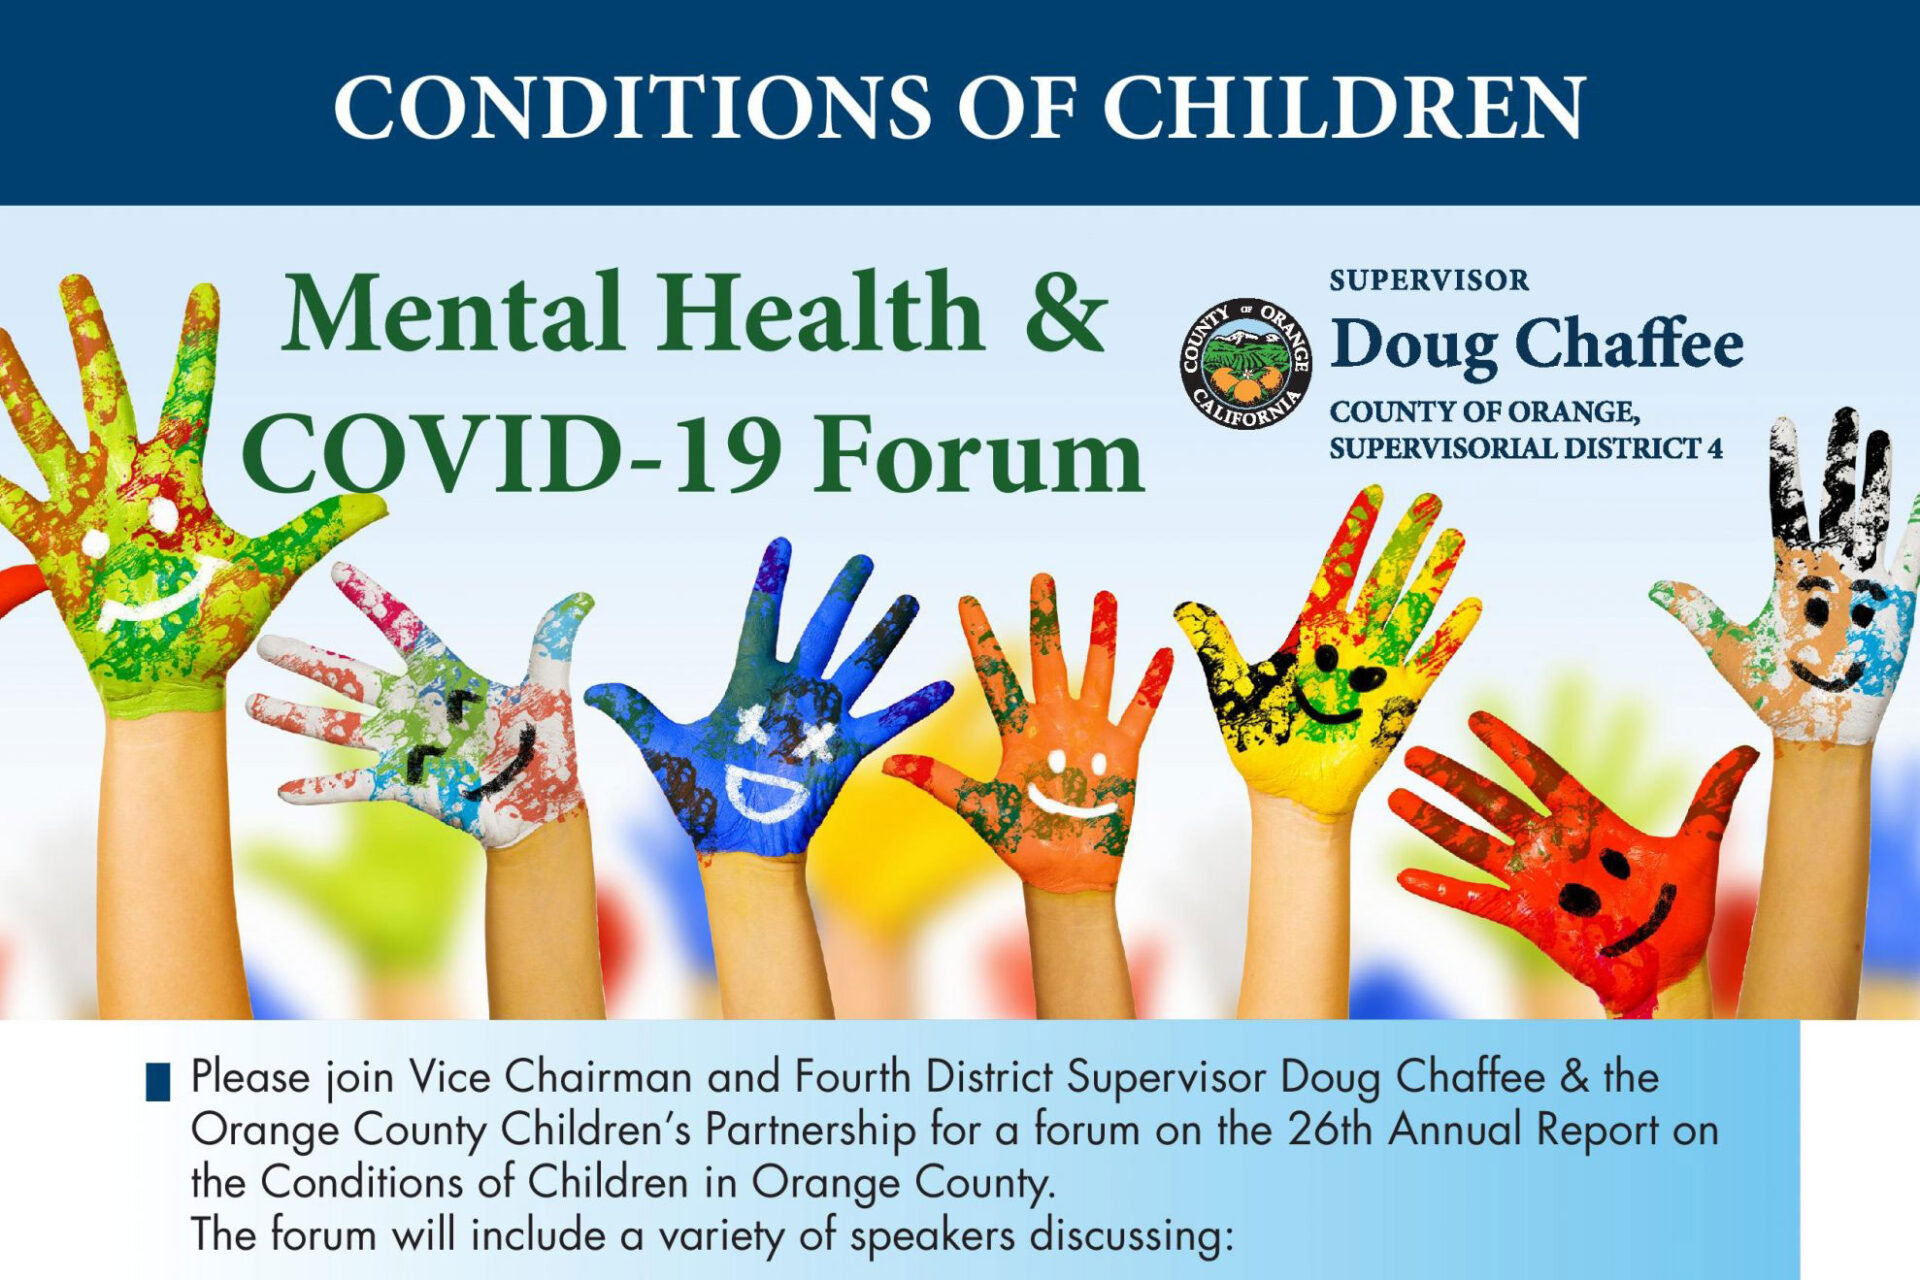 Mental Health & COVID-19 Forum